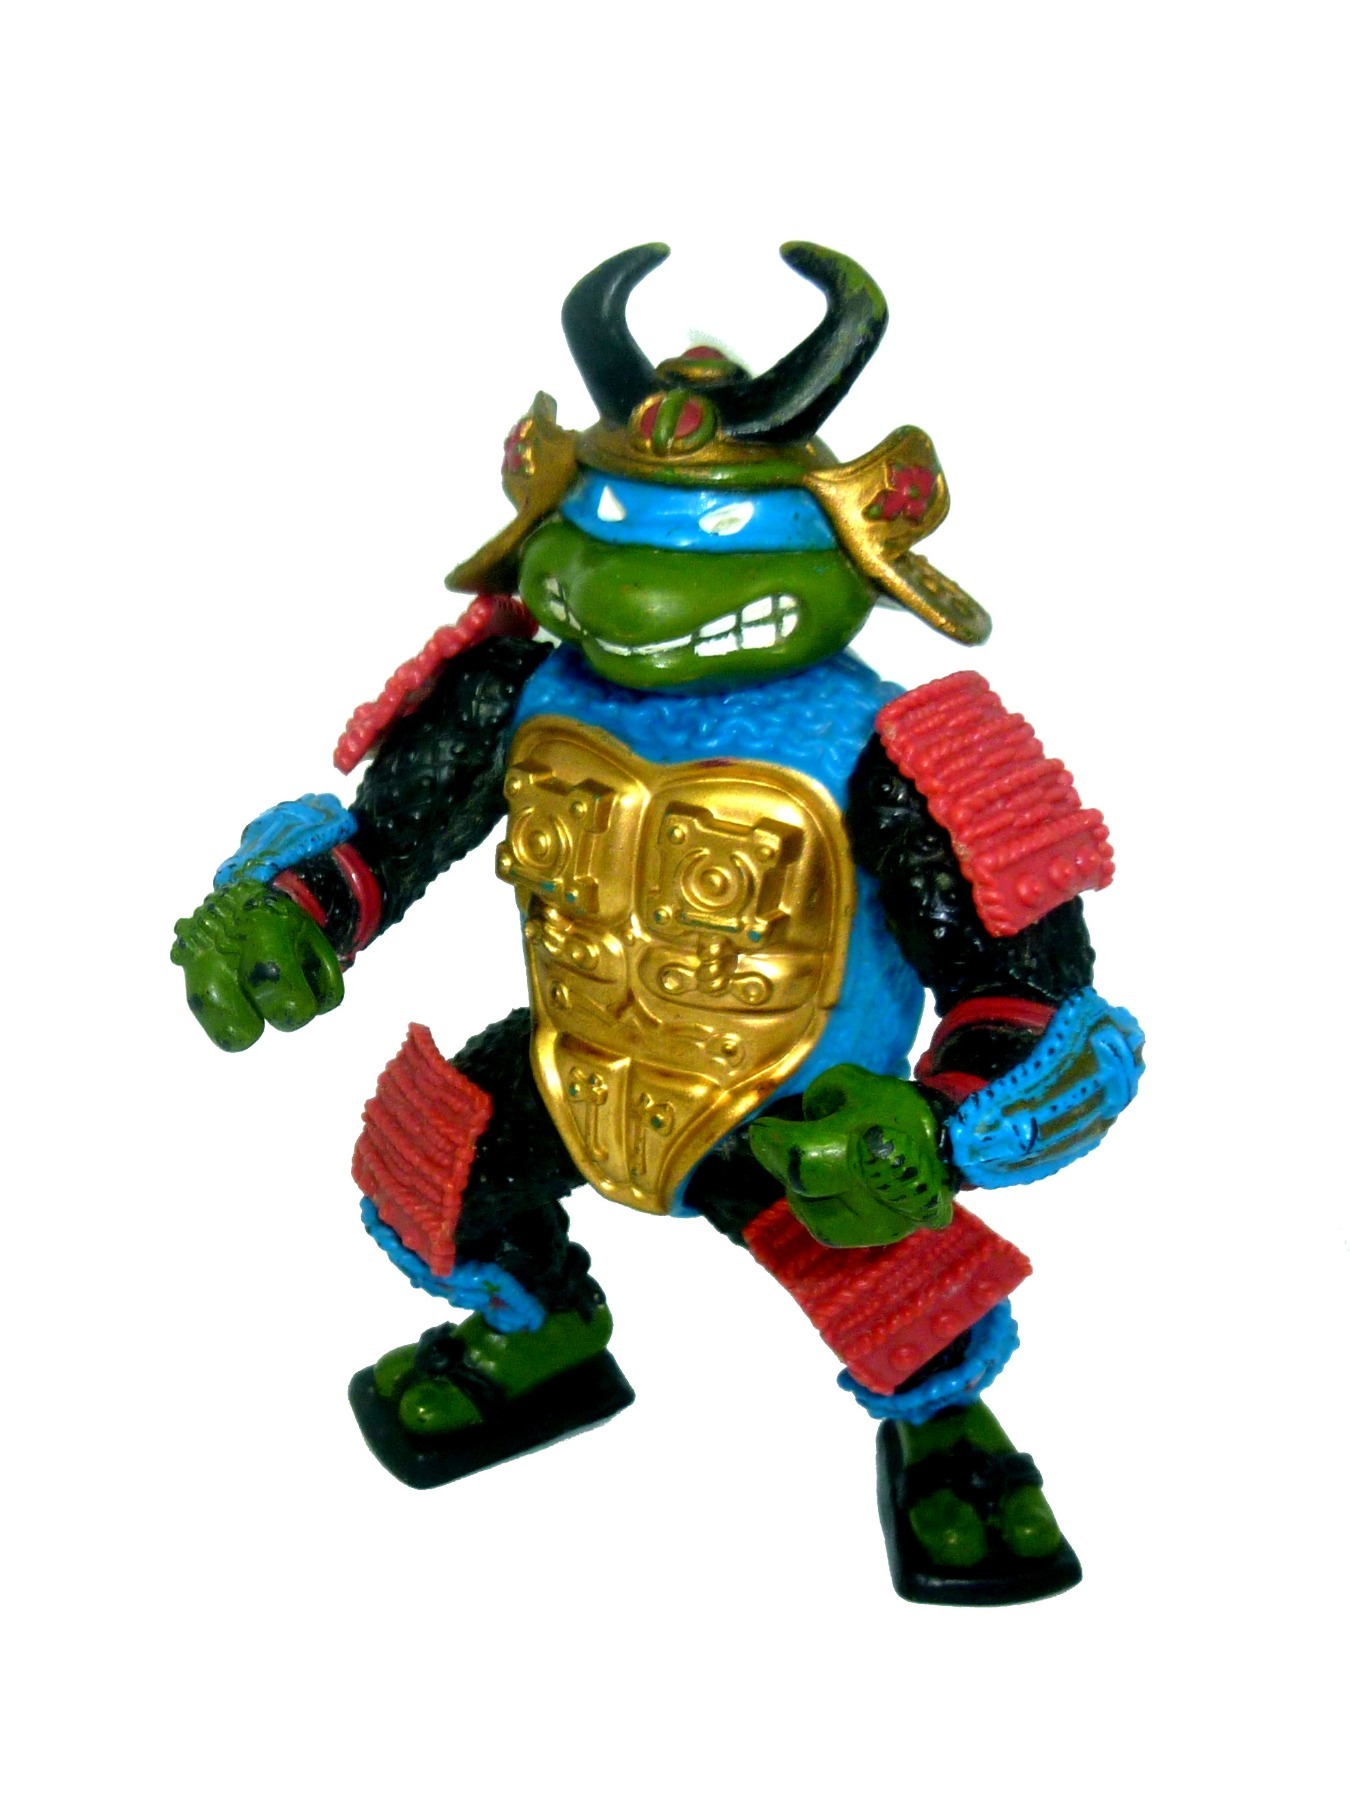 Leo, The Sewer Samurai - Leonardo 1990 Mirage Studios / Playmates Toys 2